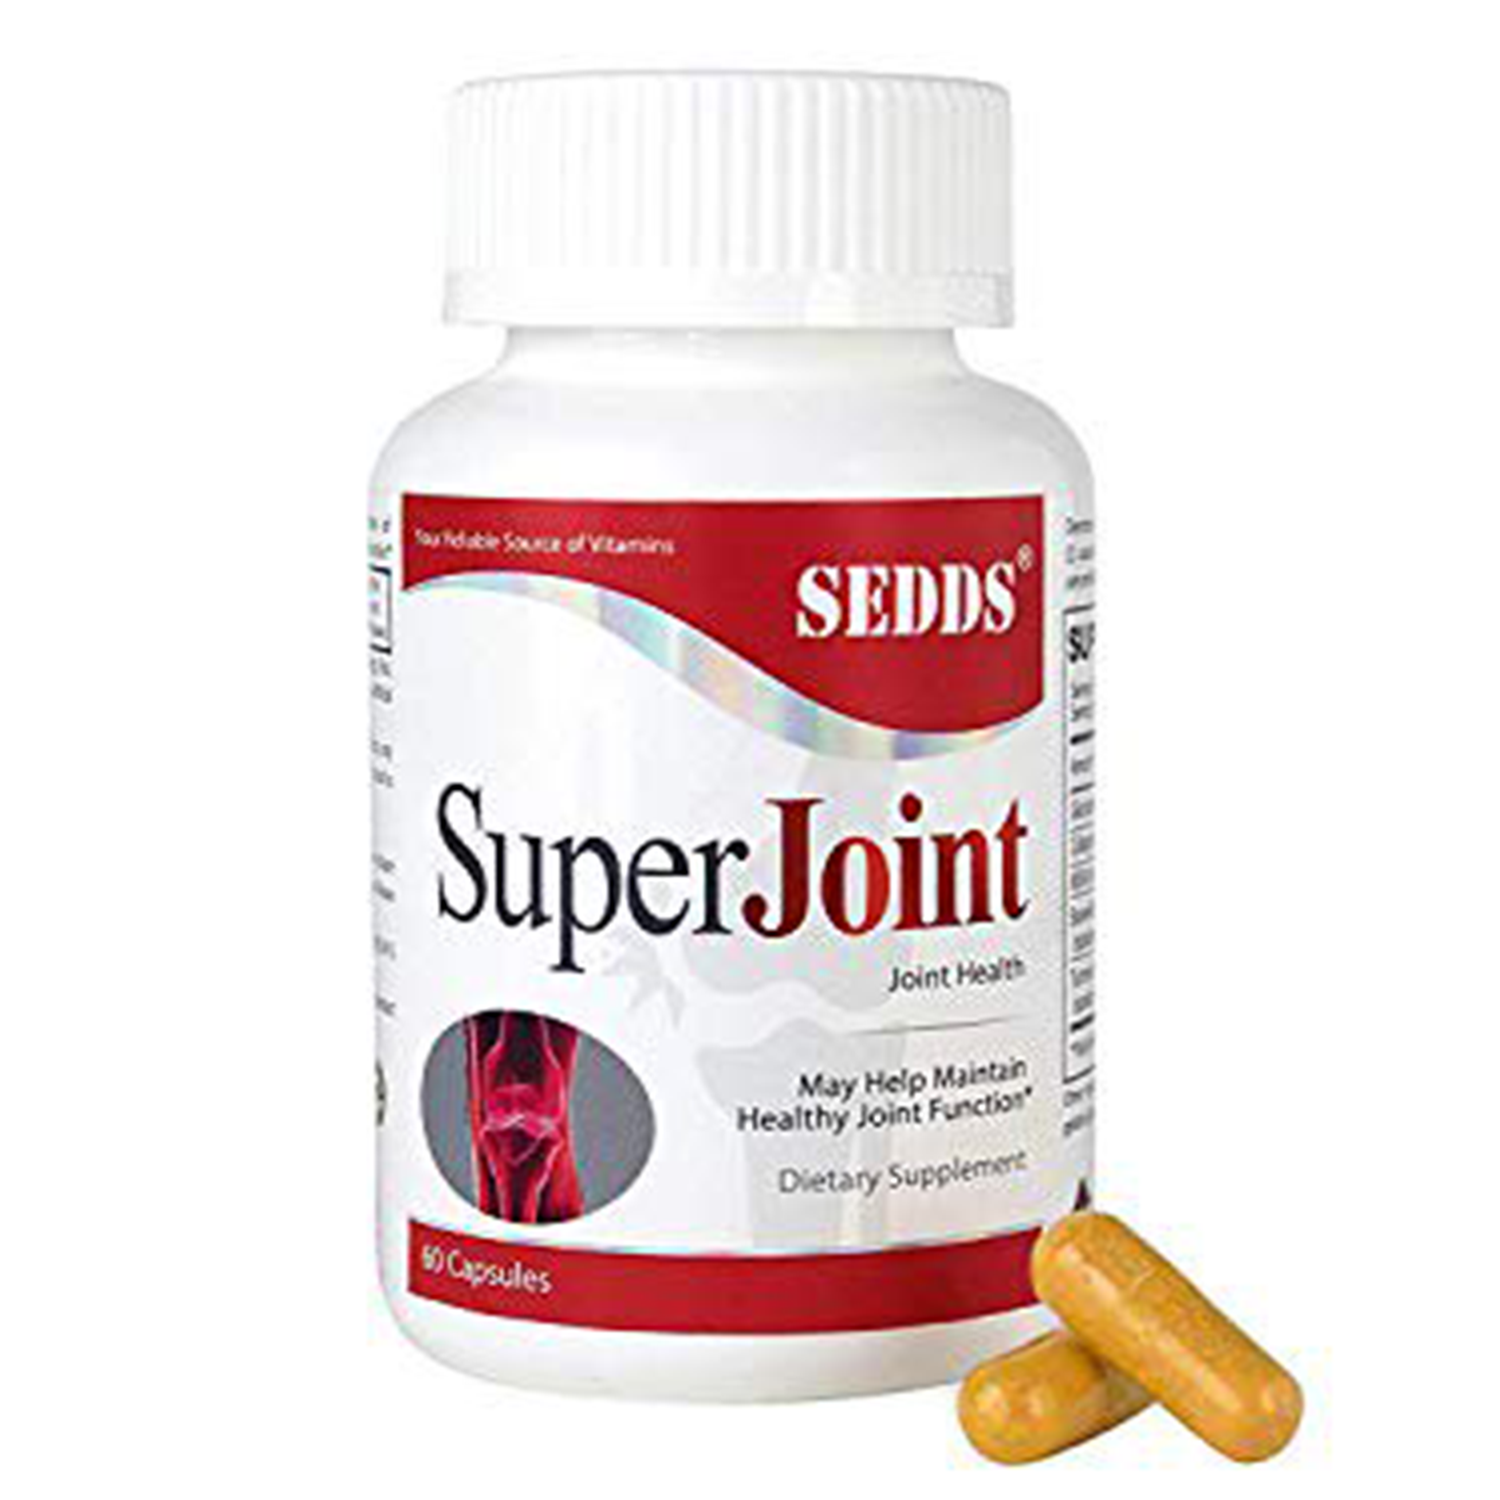 Super Joint Pain Relief Supplements